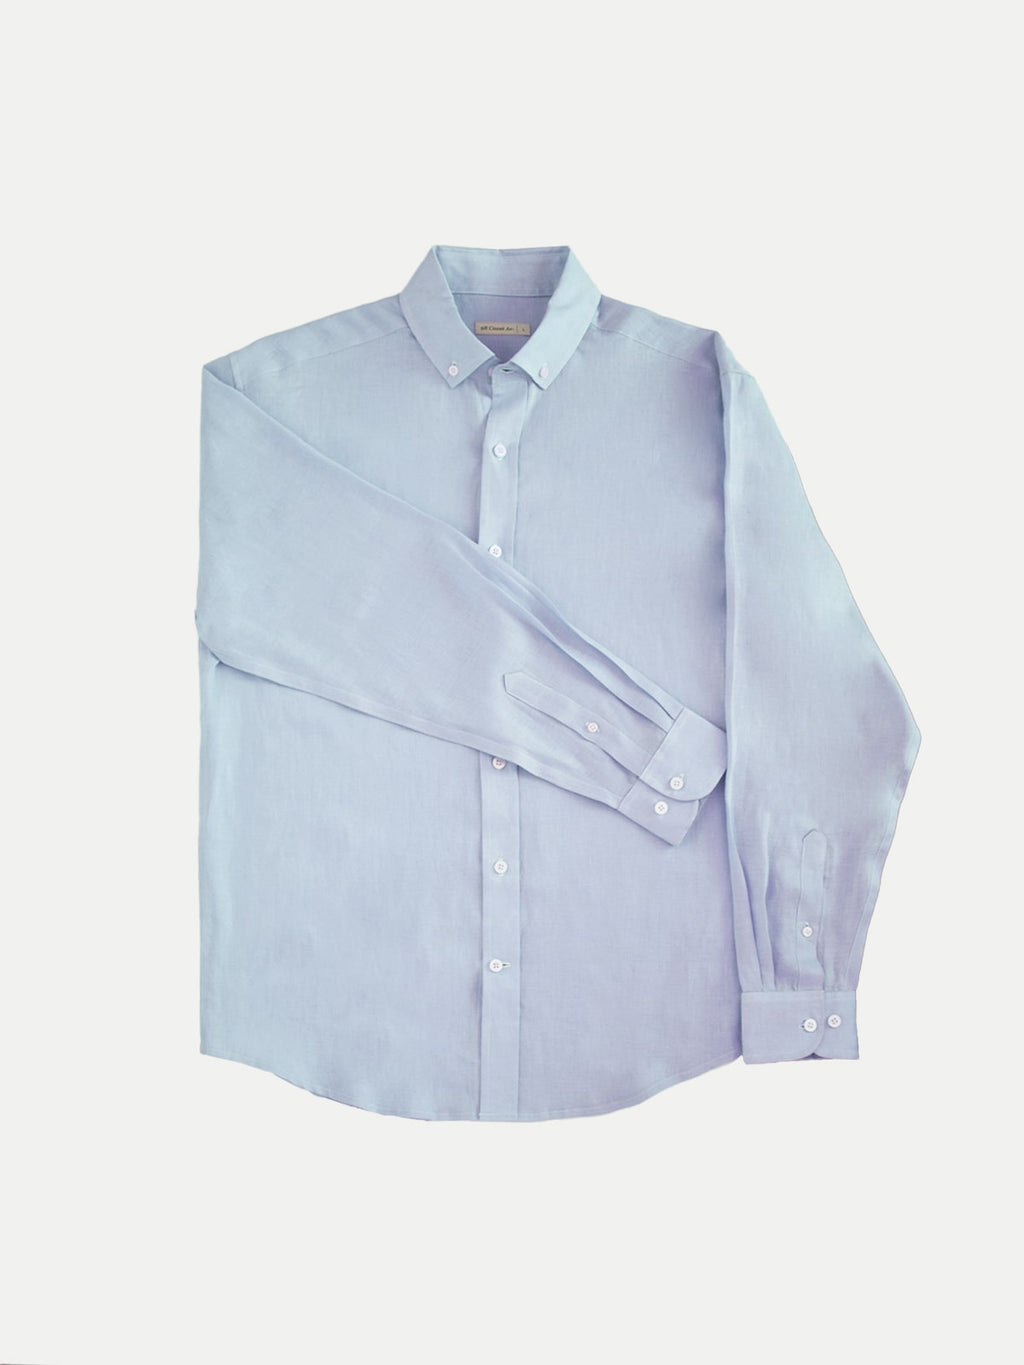 Blue Men Linen Shirt at Rs 350 in Hubli